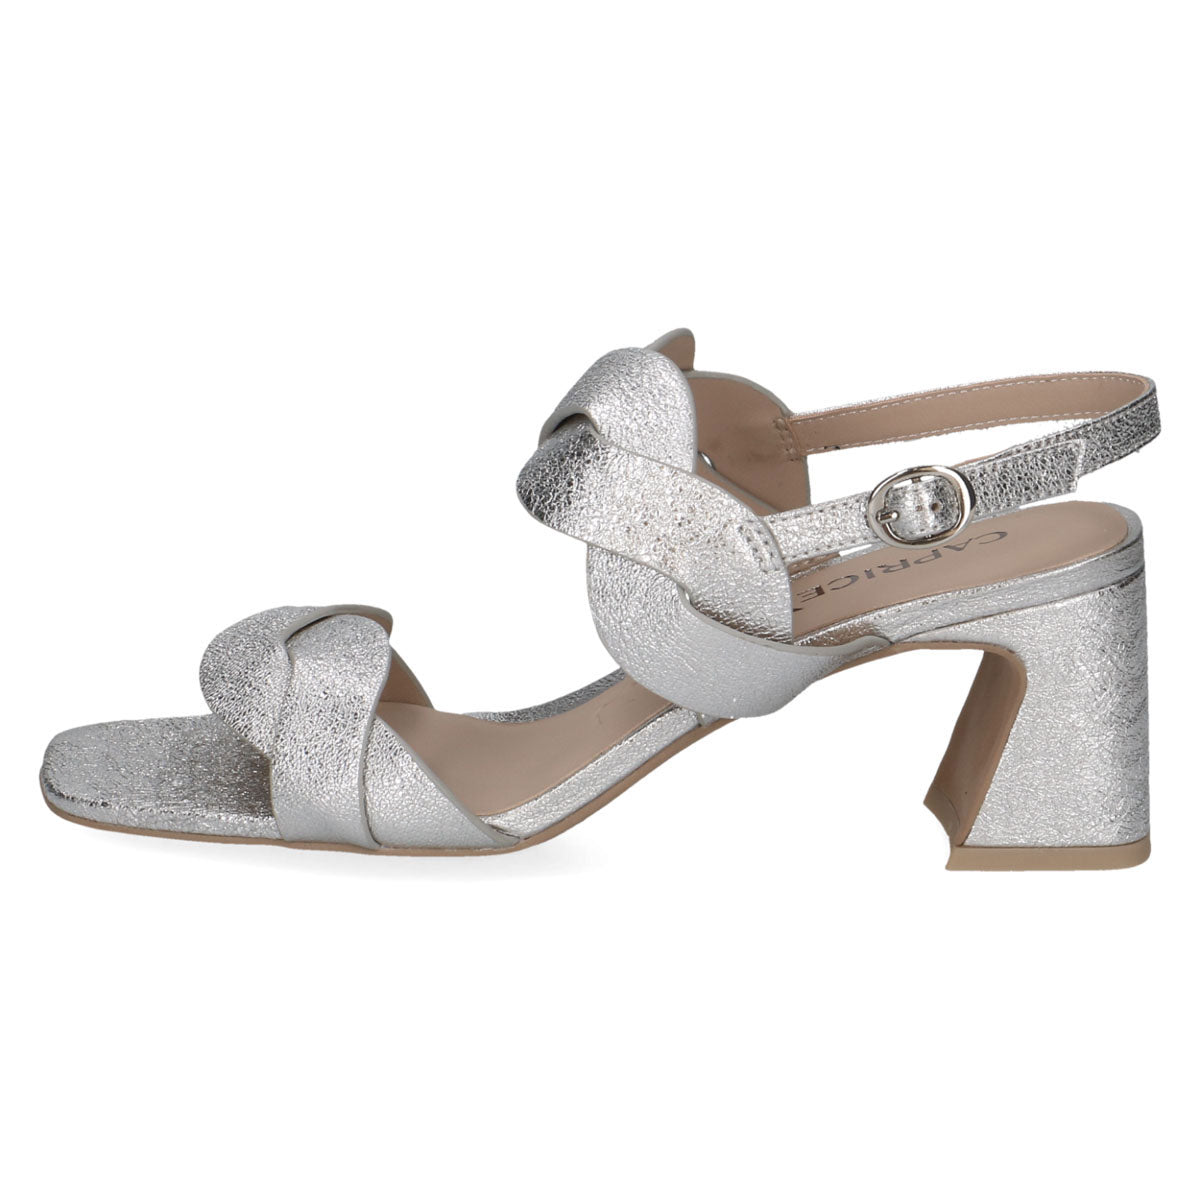 Silver Metallic Block Heel Sandal with Bow Detail